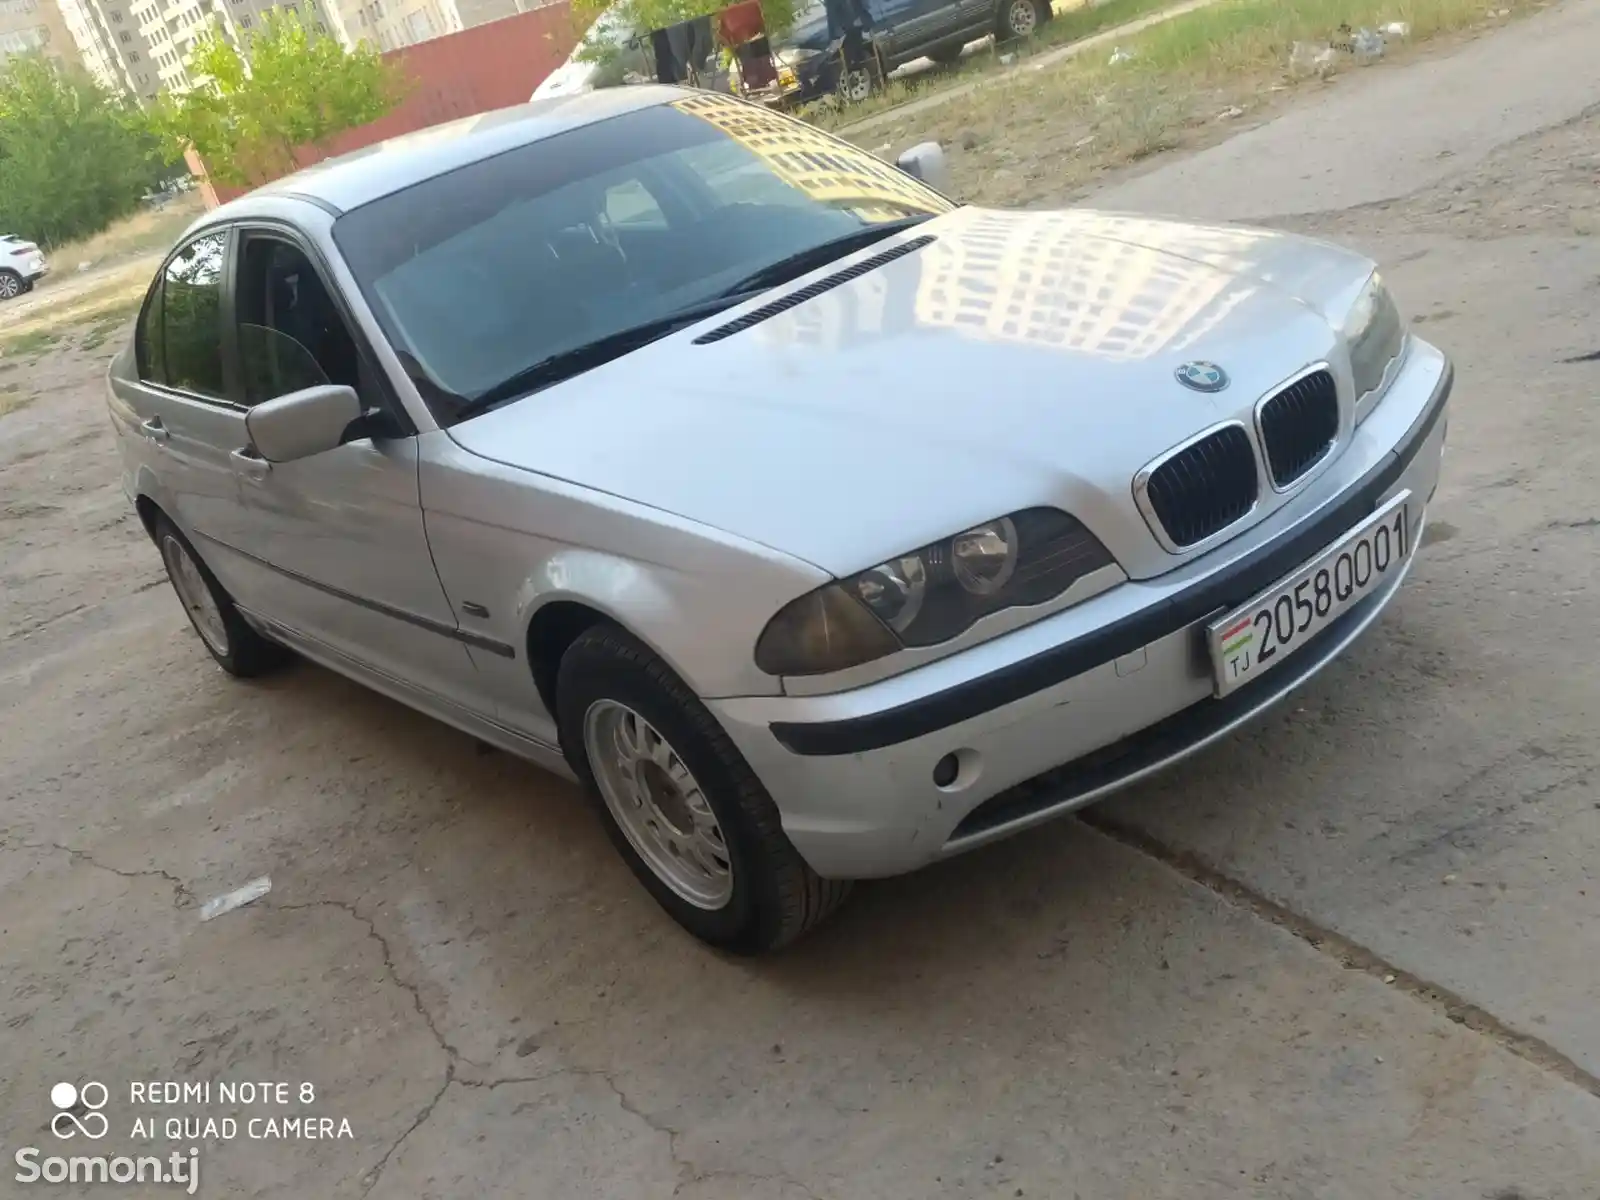 BMW 3 series, 1998-2